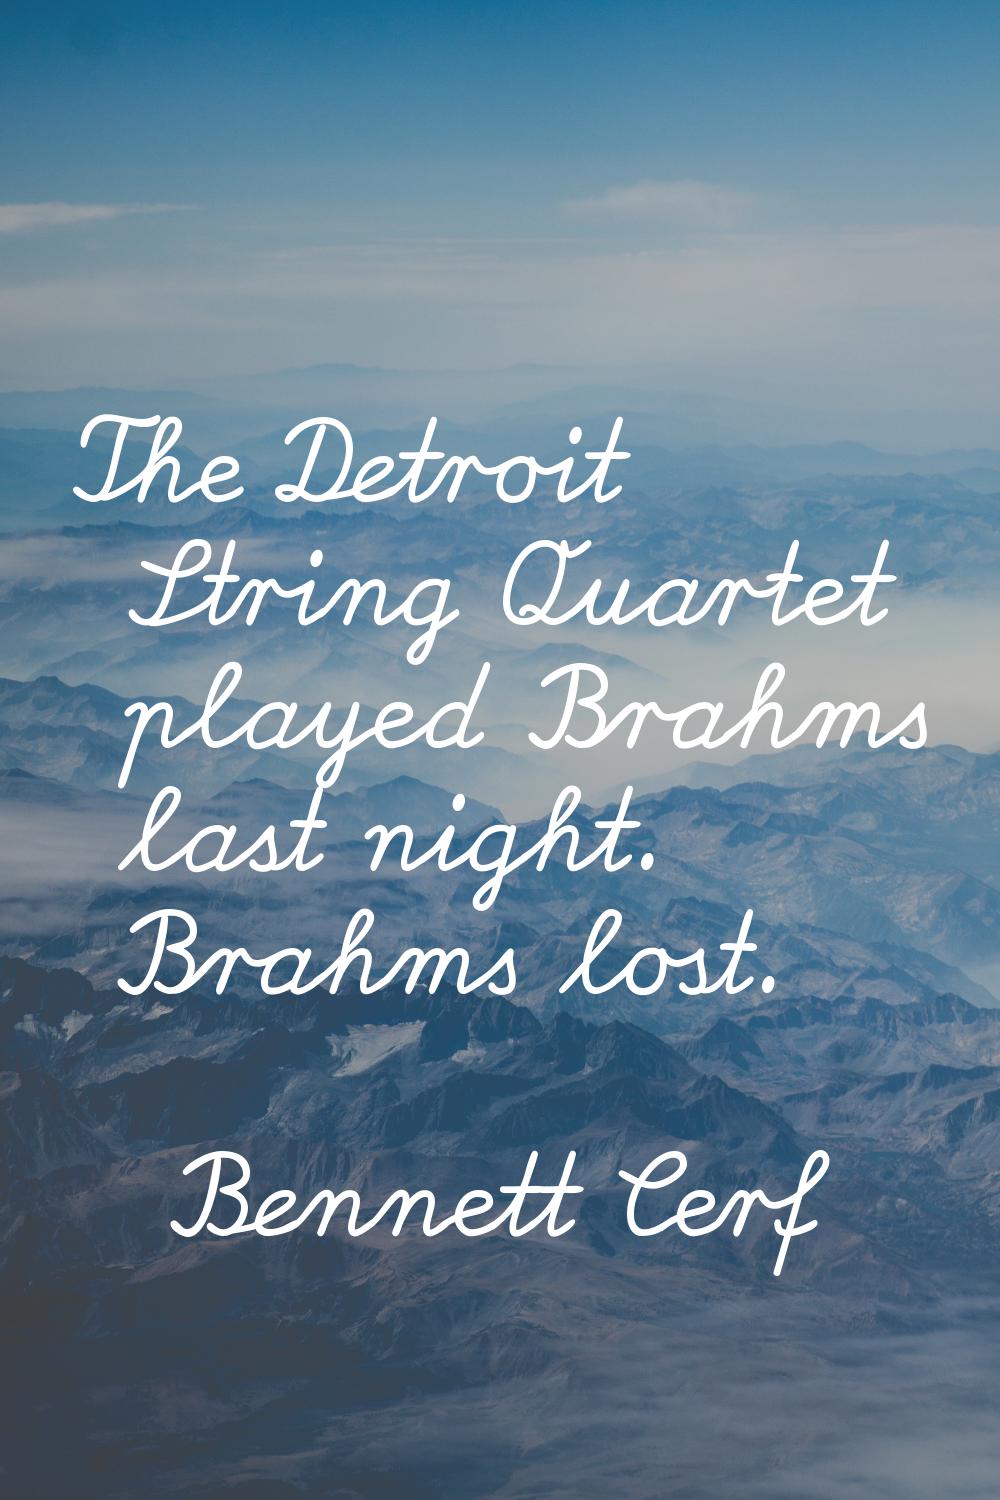 The Detroit String Quartet played Brahms last night. Brahms lost.